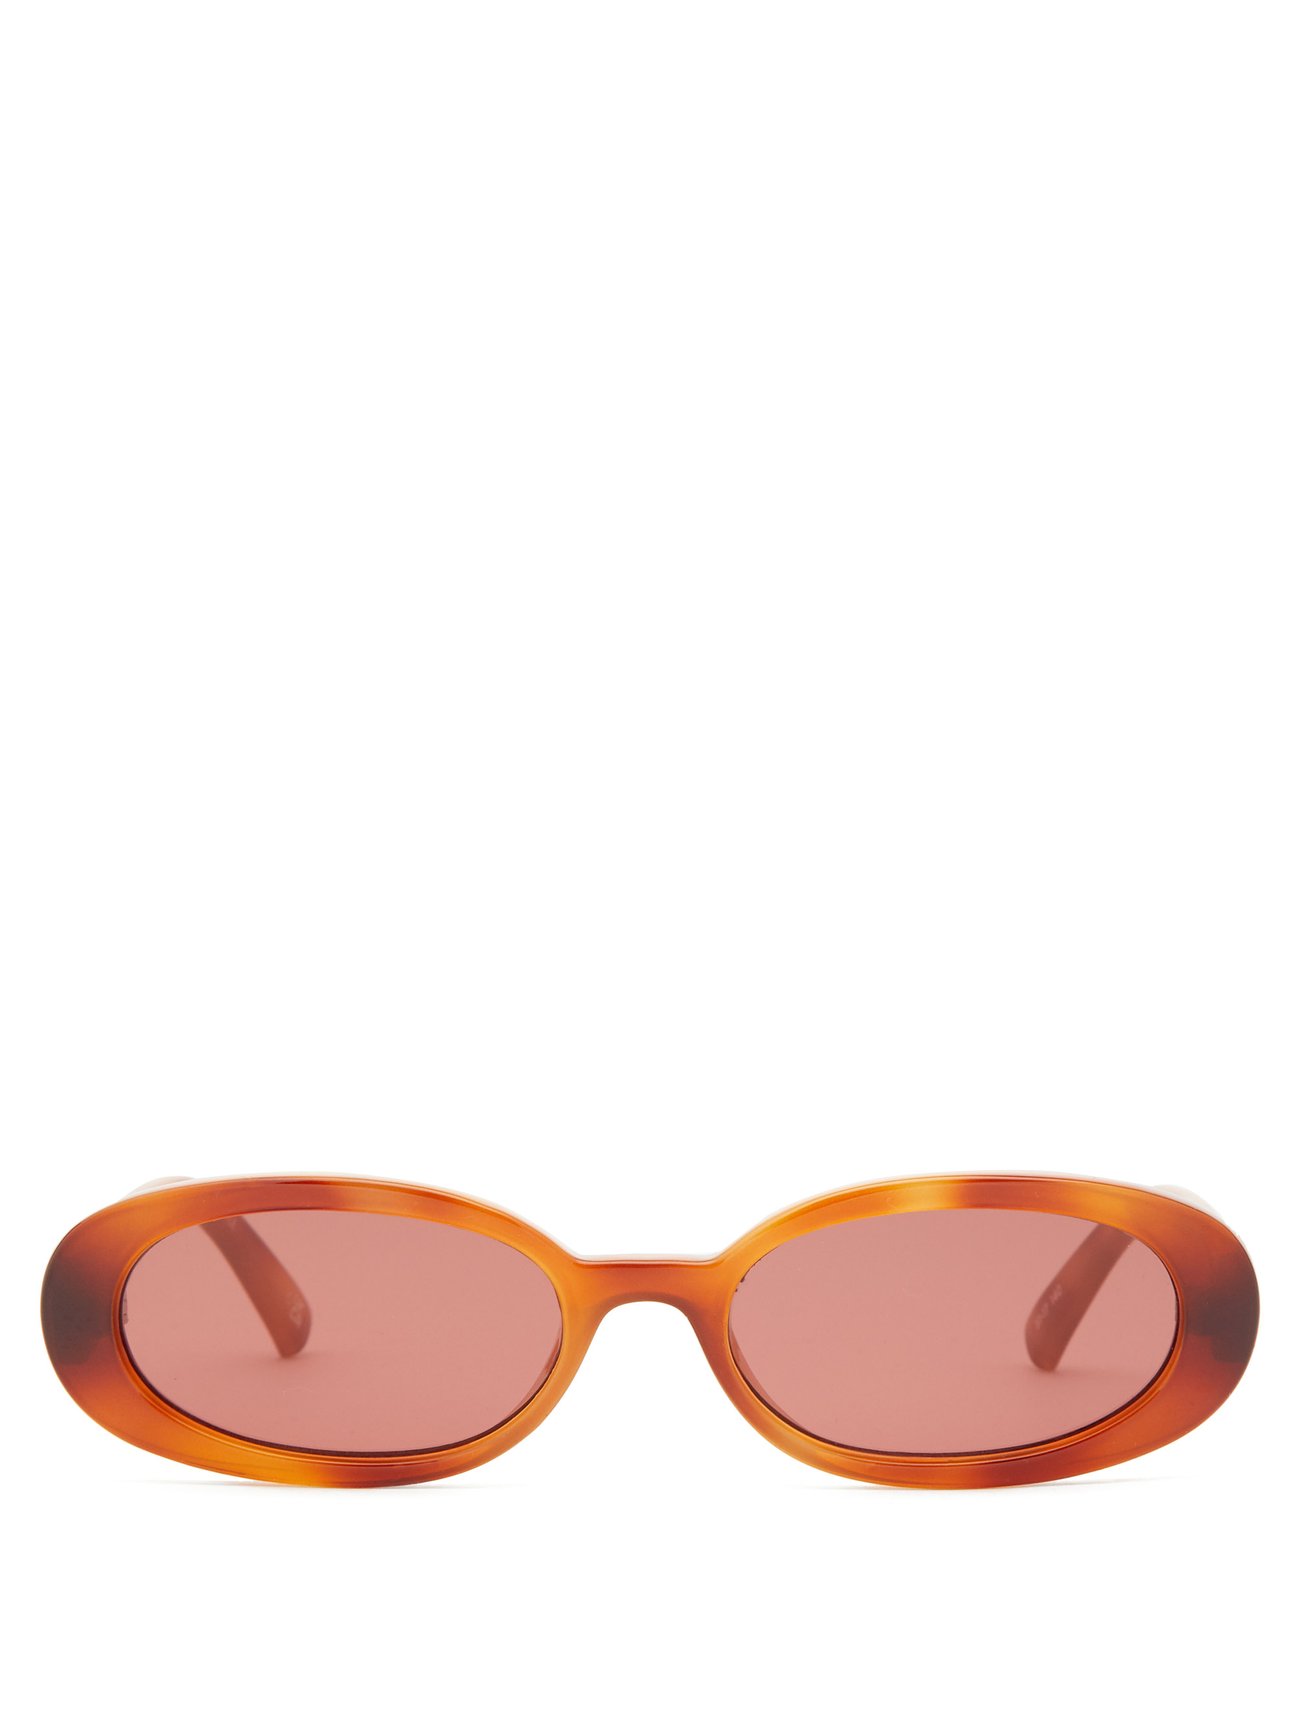 Brown Outta Love oval tortoiseshell-acetate sunglasses | Le Specs ...